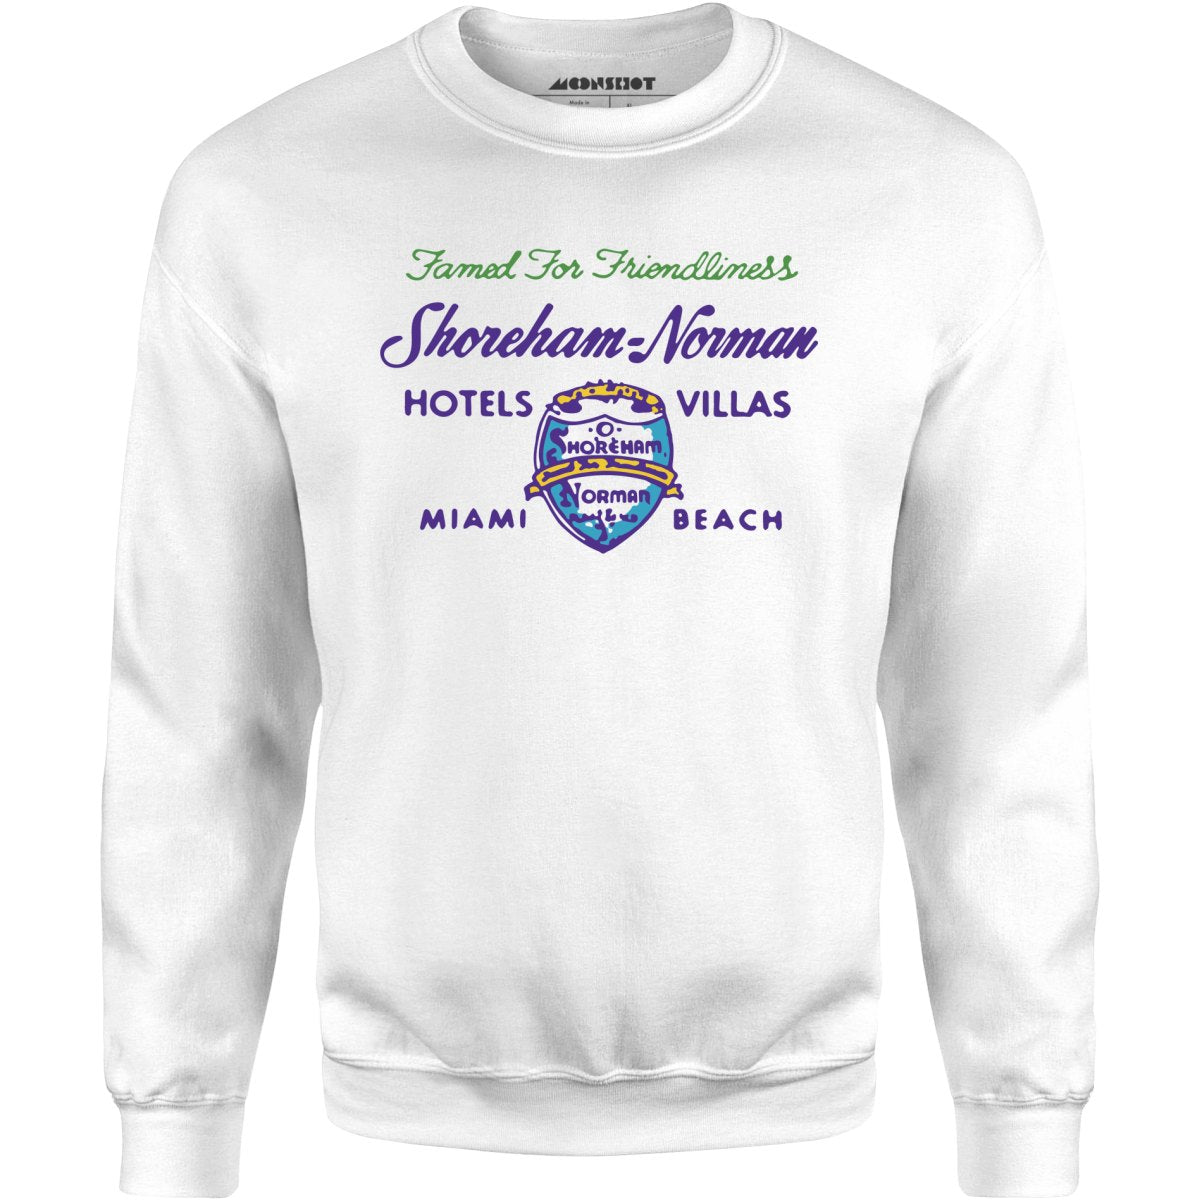 Shoreham Norman Hotels & Villas v2 - Miami, FL - Vintage Hotel - Unisex Sweatshirt